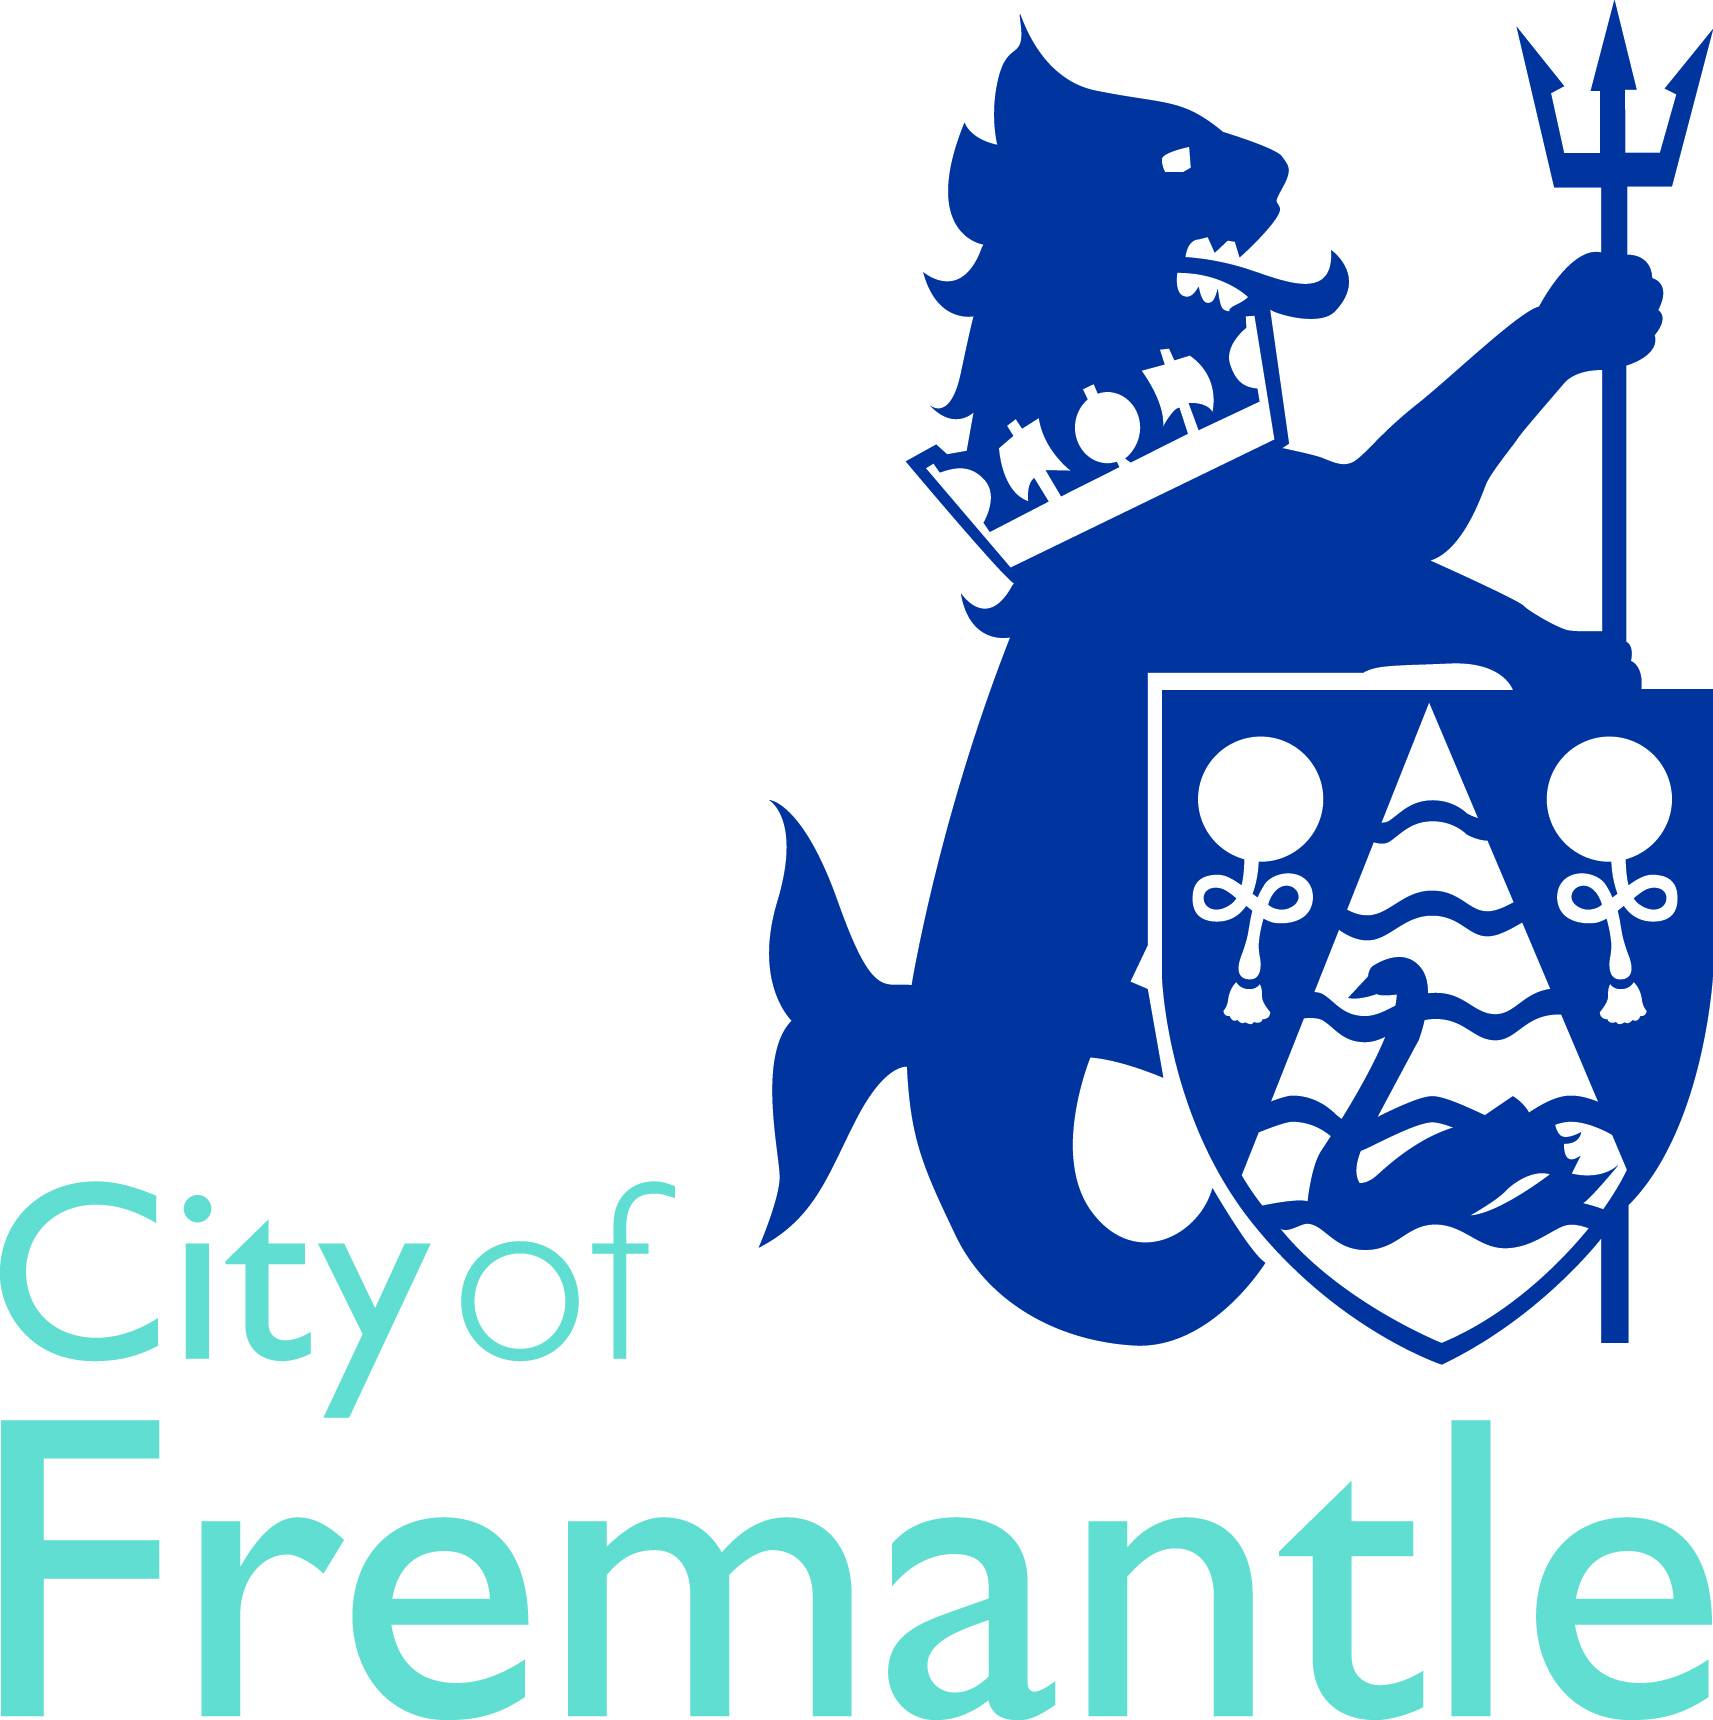 City of Fremantle logo 